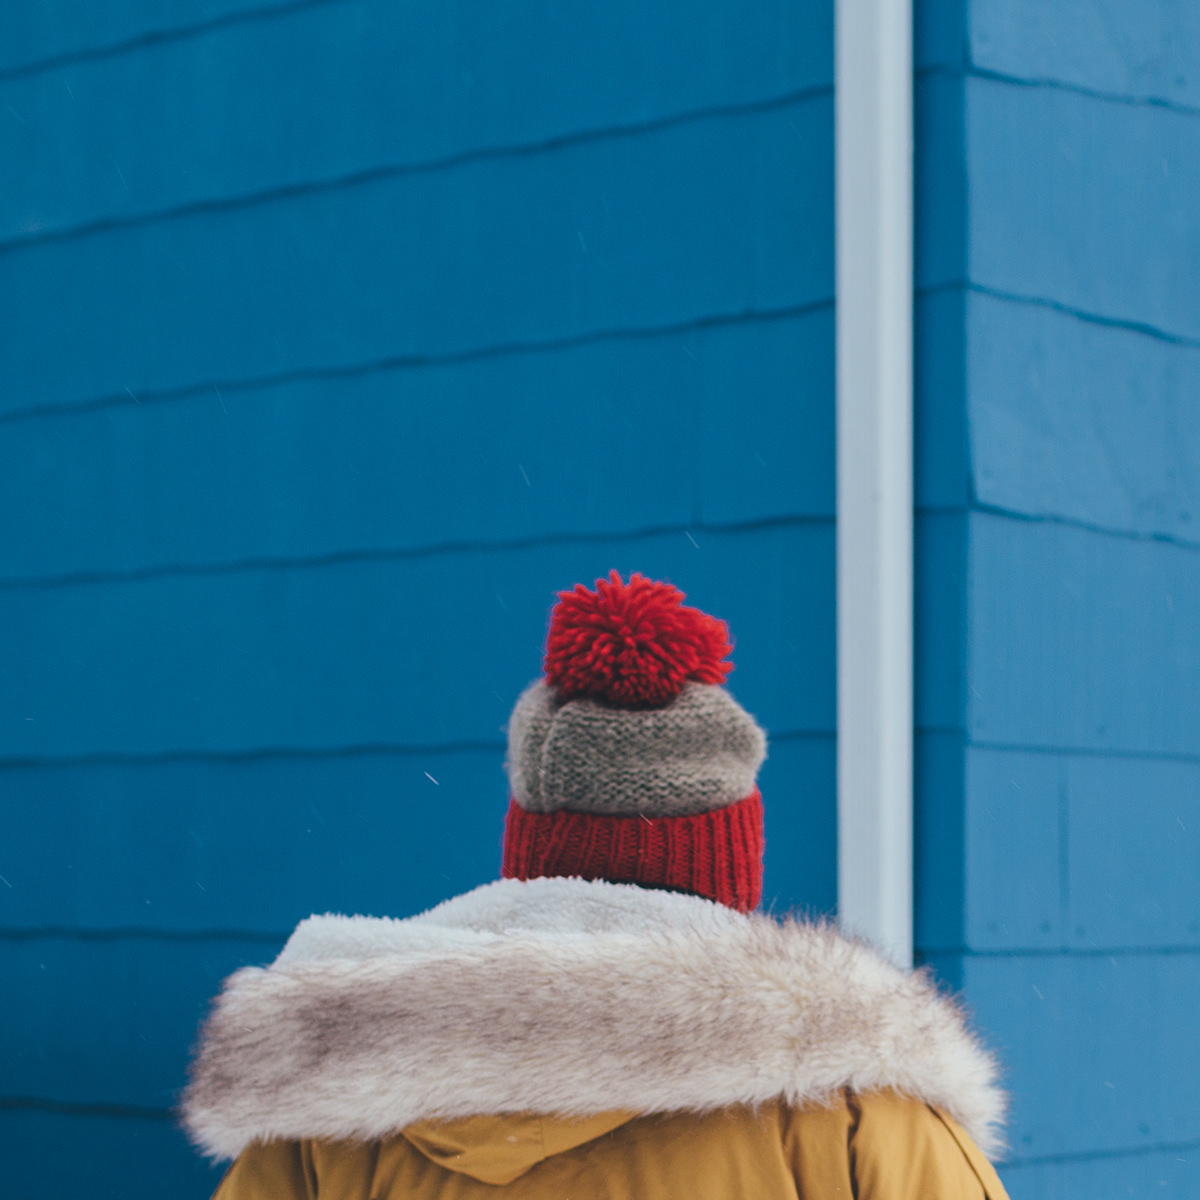 risd Blizzard Blizzard Juno january winter snow Providence Rhode Island portrait Landscape houses color